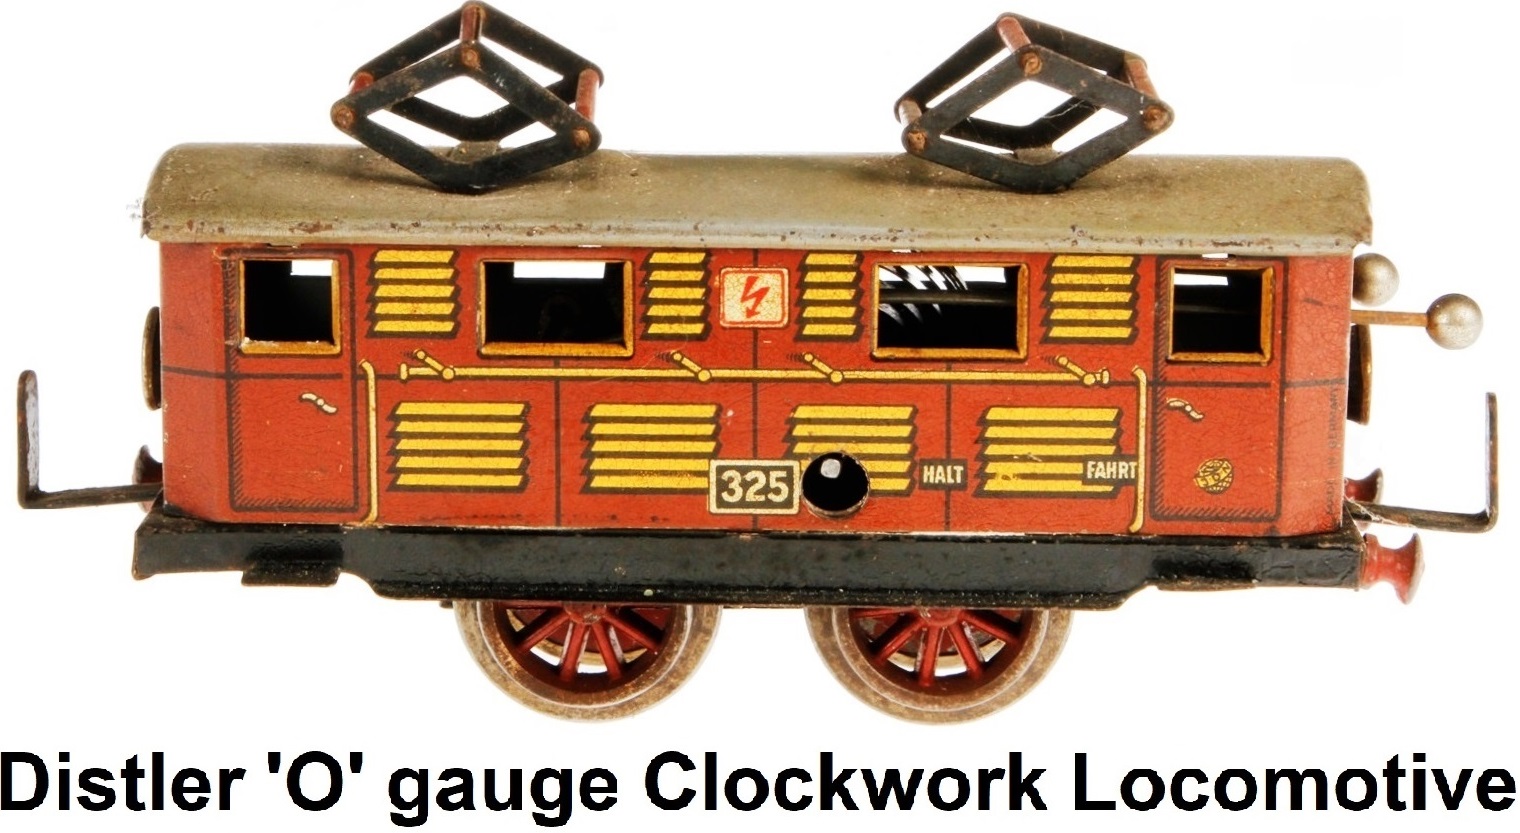 Johann Distler 'O' gauge tinplate lithographed clockwork electric outline locomotive #325